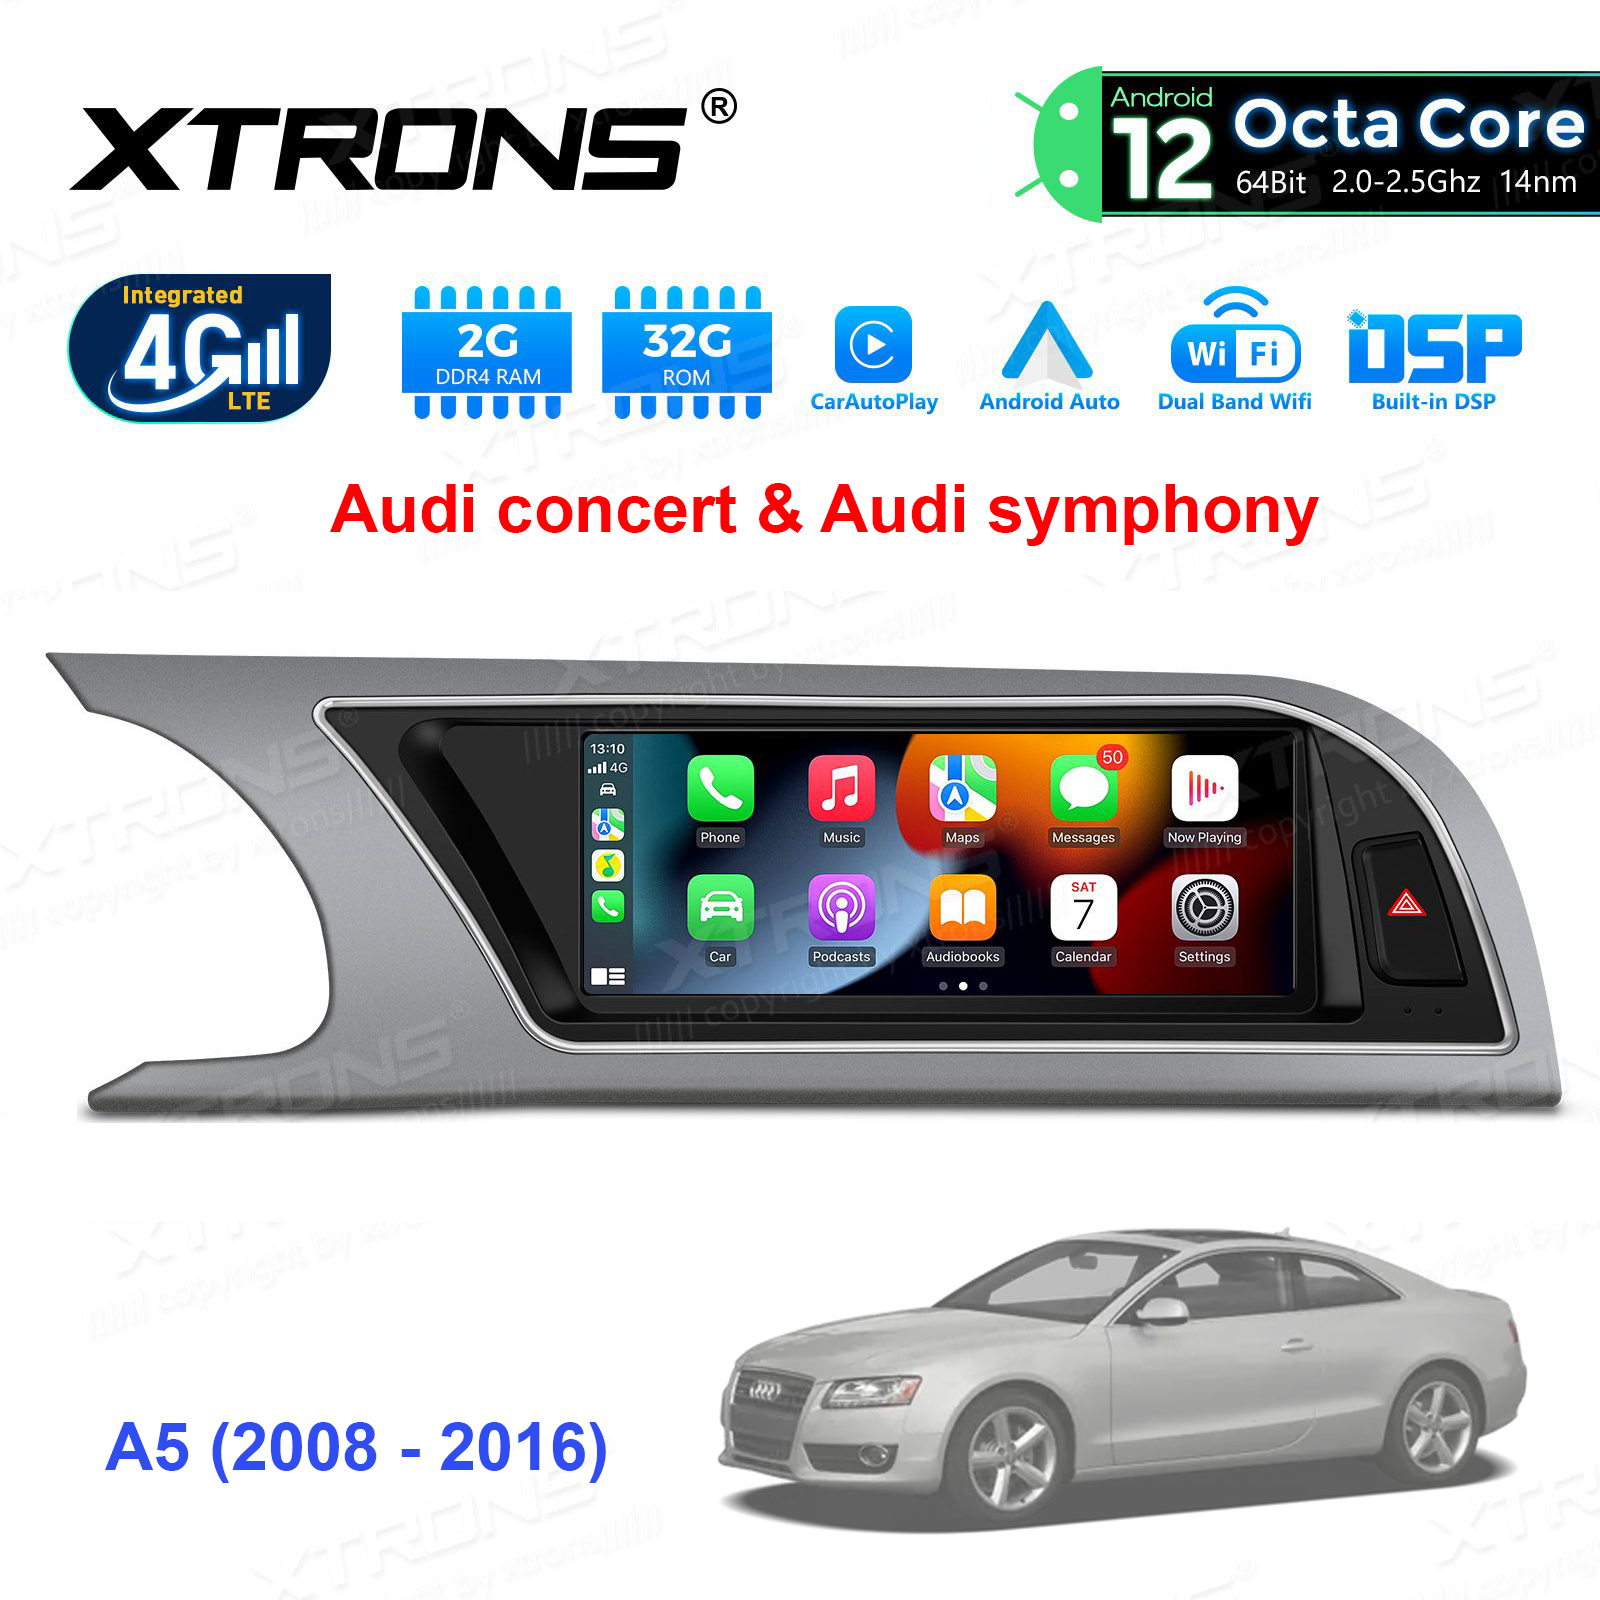 Audi A5 (2008 - 2016) | Audi concert & Audi symphony Android 12 Car Multimedia Player with GPS Navigation